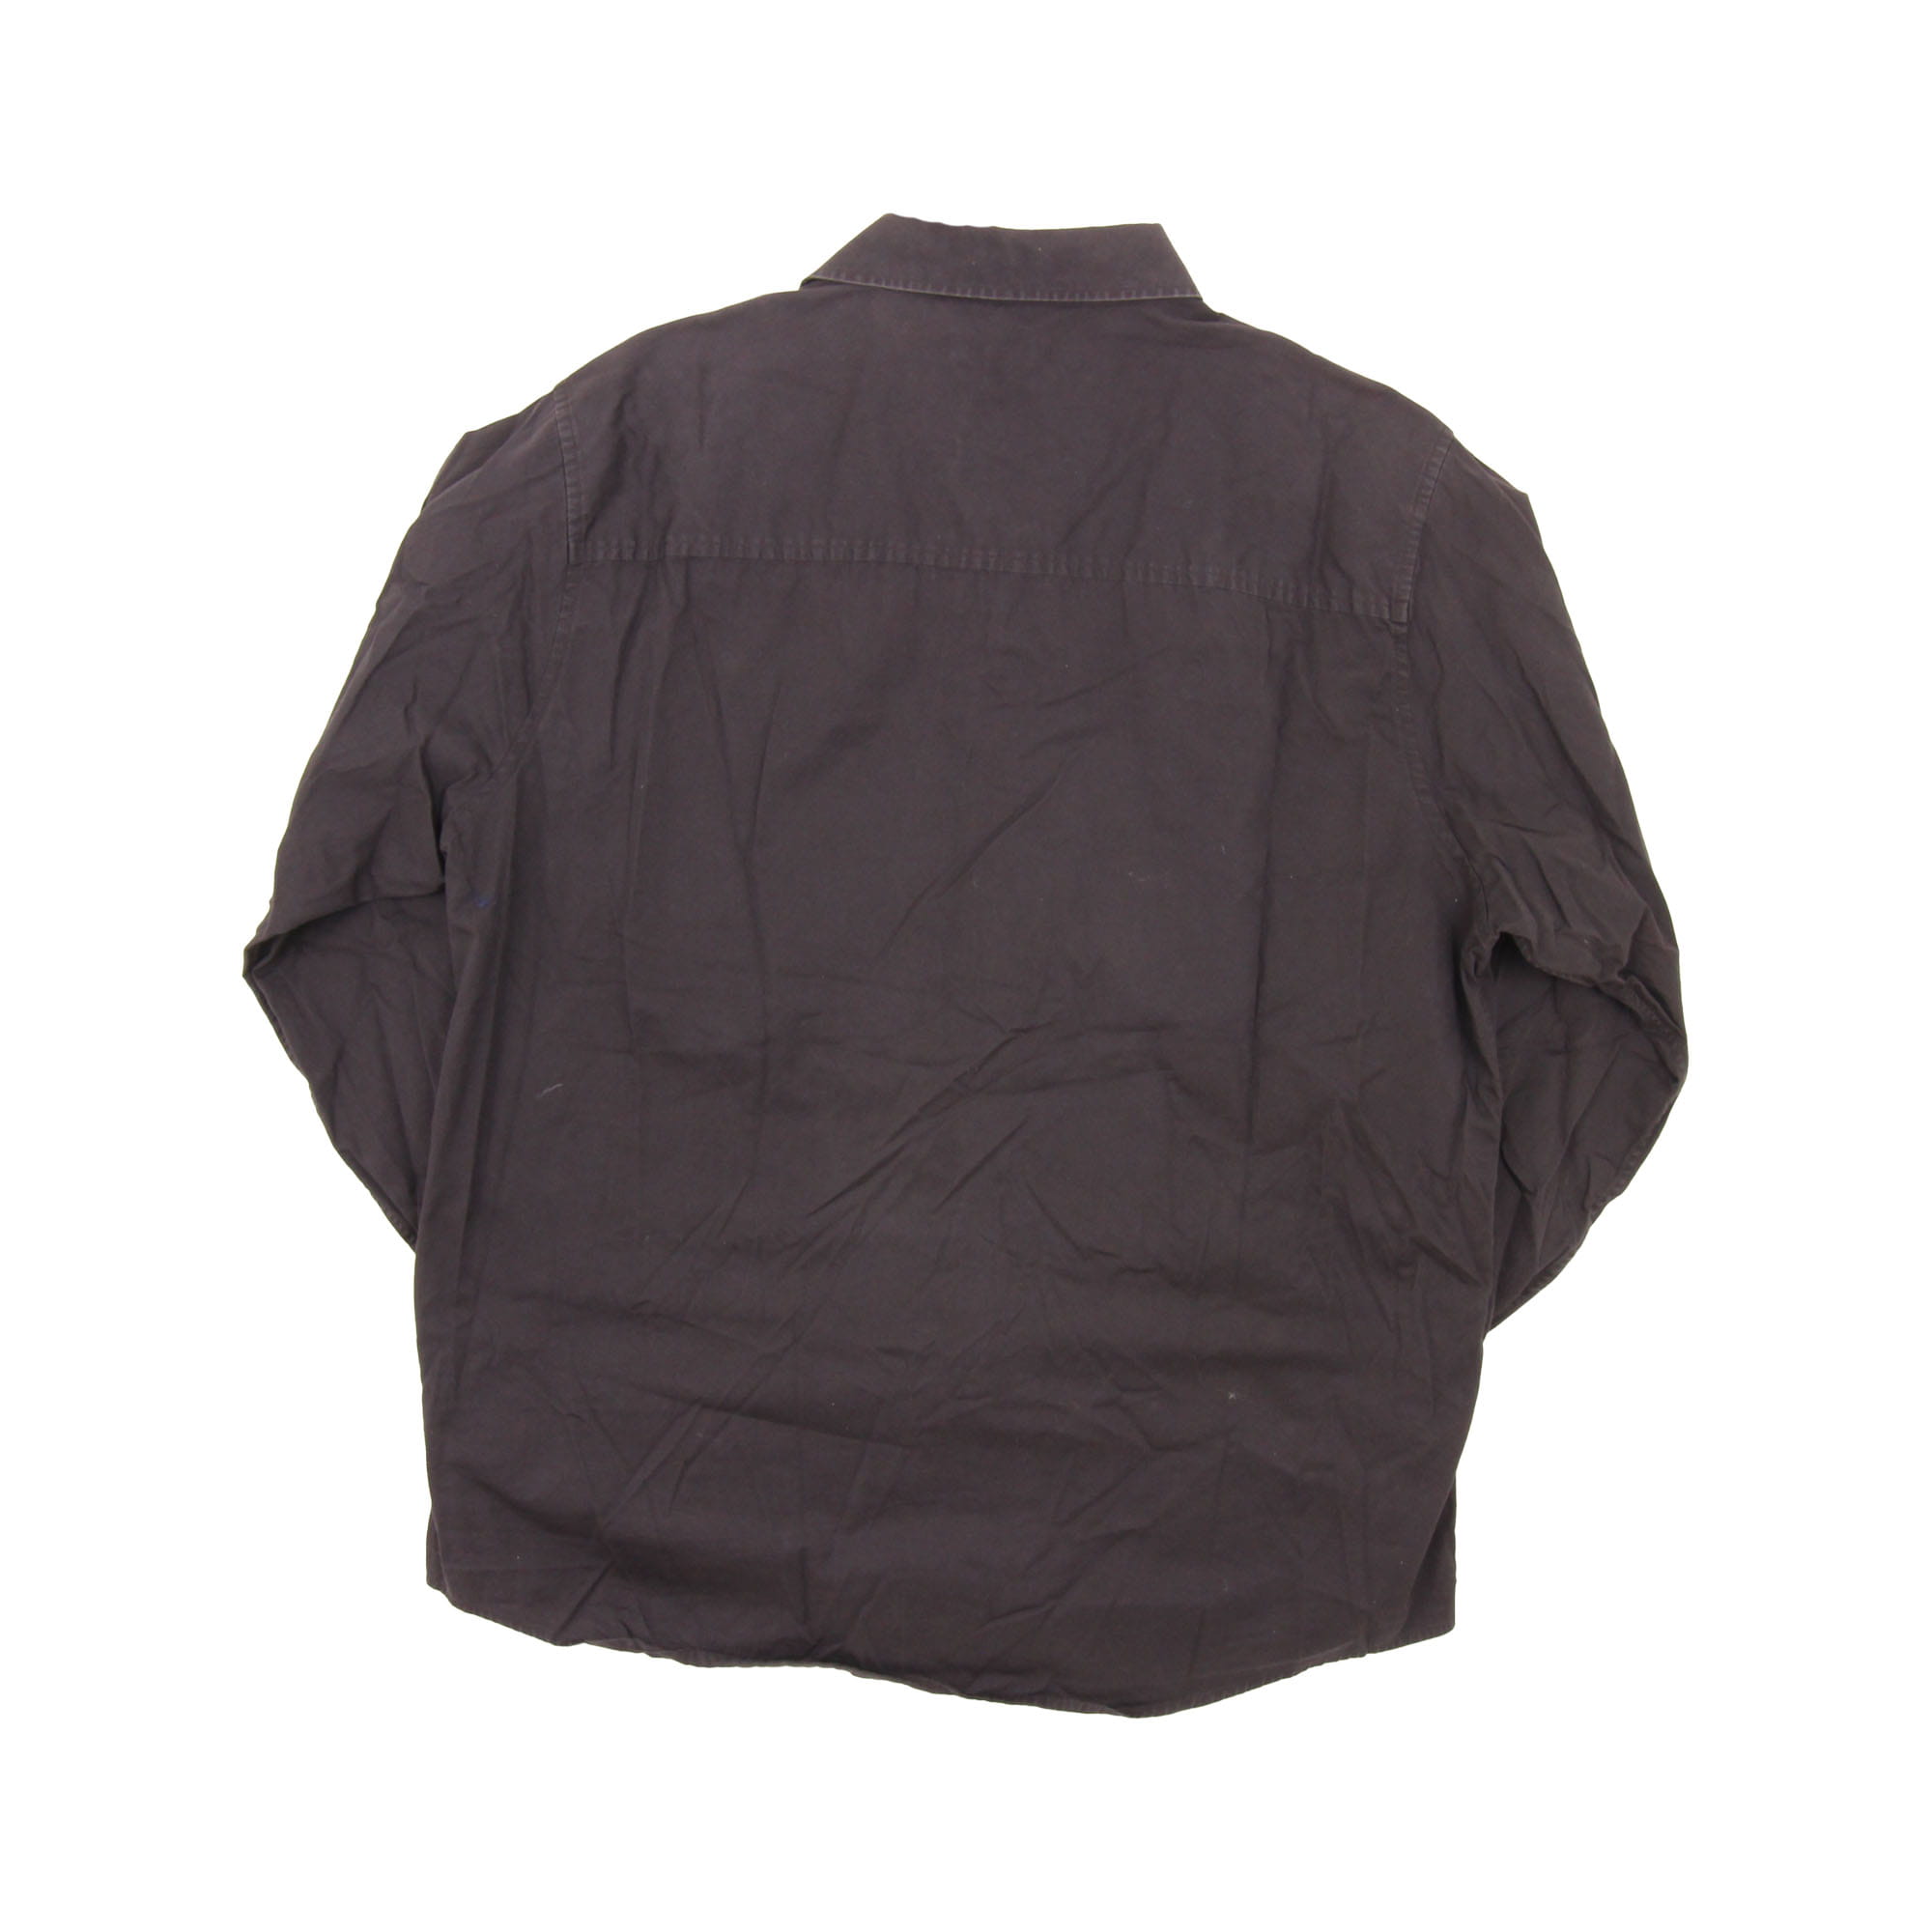 Burberry Long Sleeve Shirt - XL 